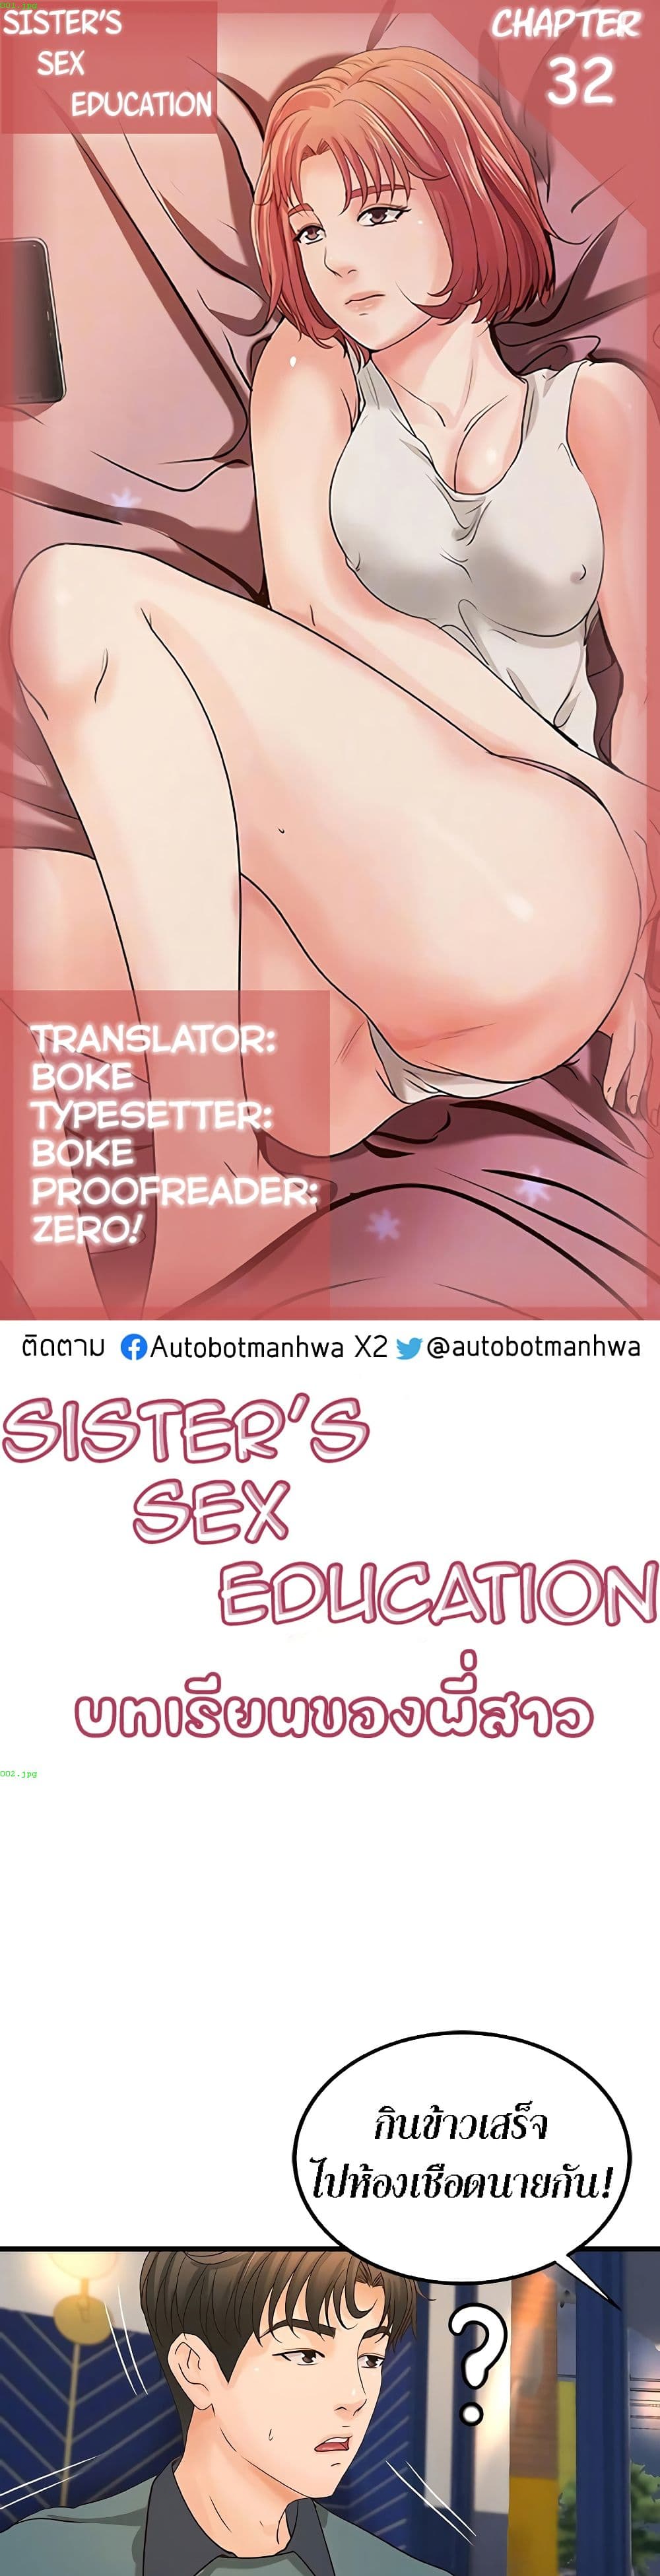 Sister's Sex Education 32 (1)